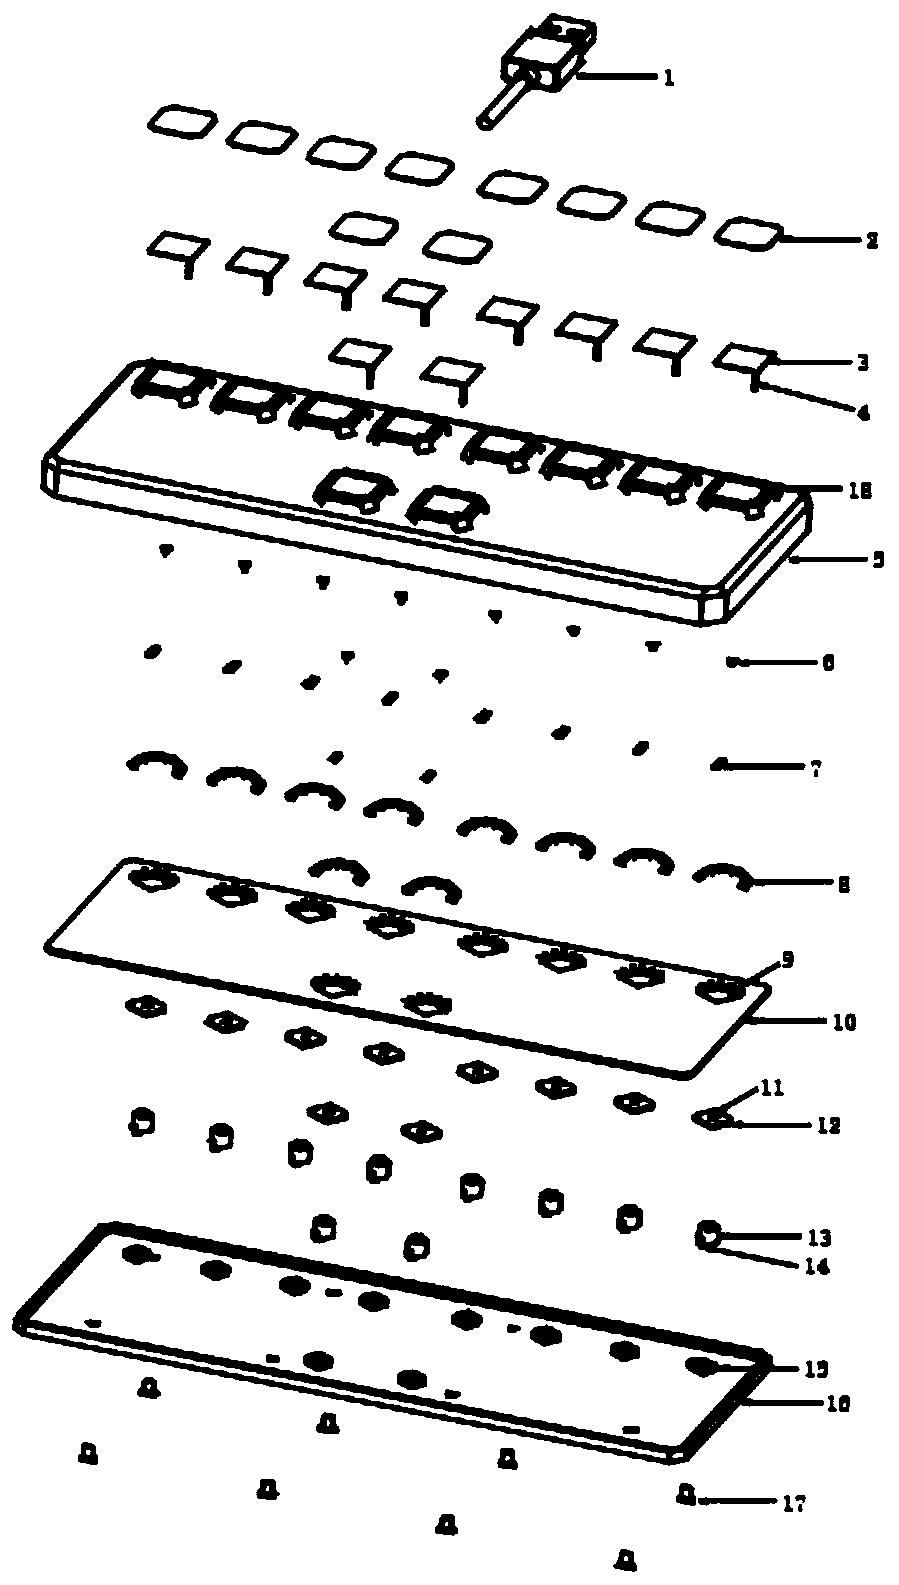 One-key multifunctional photoelectric mechanical keyboard